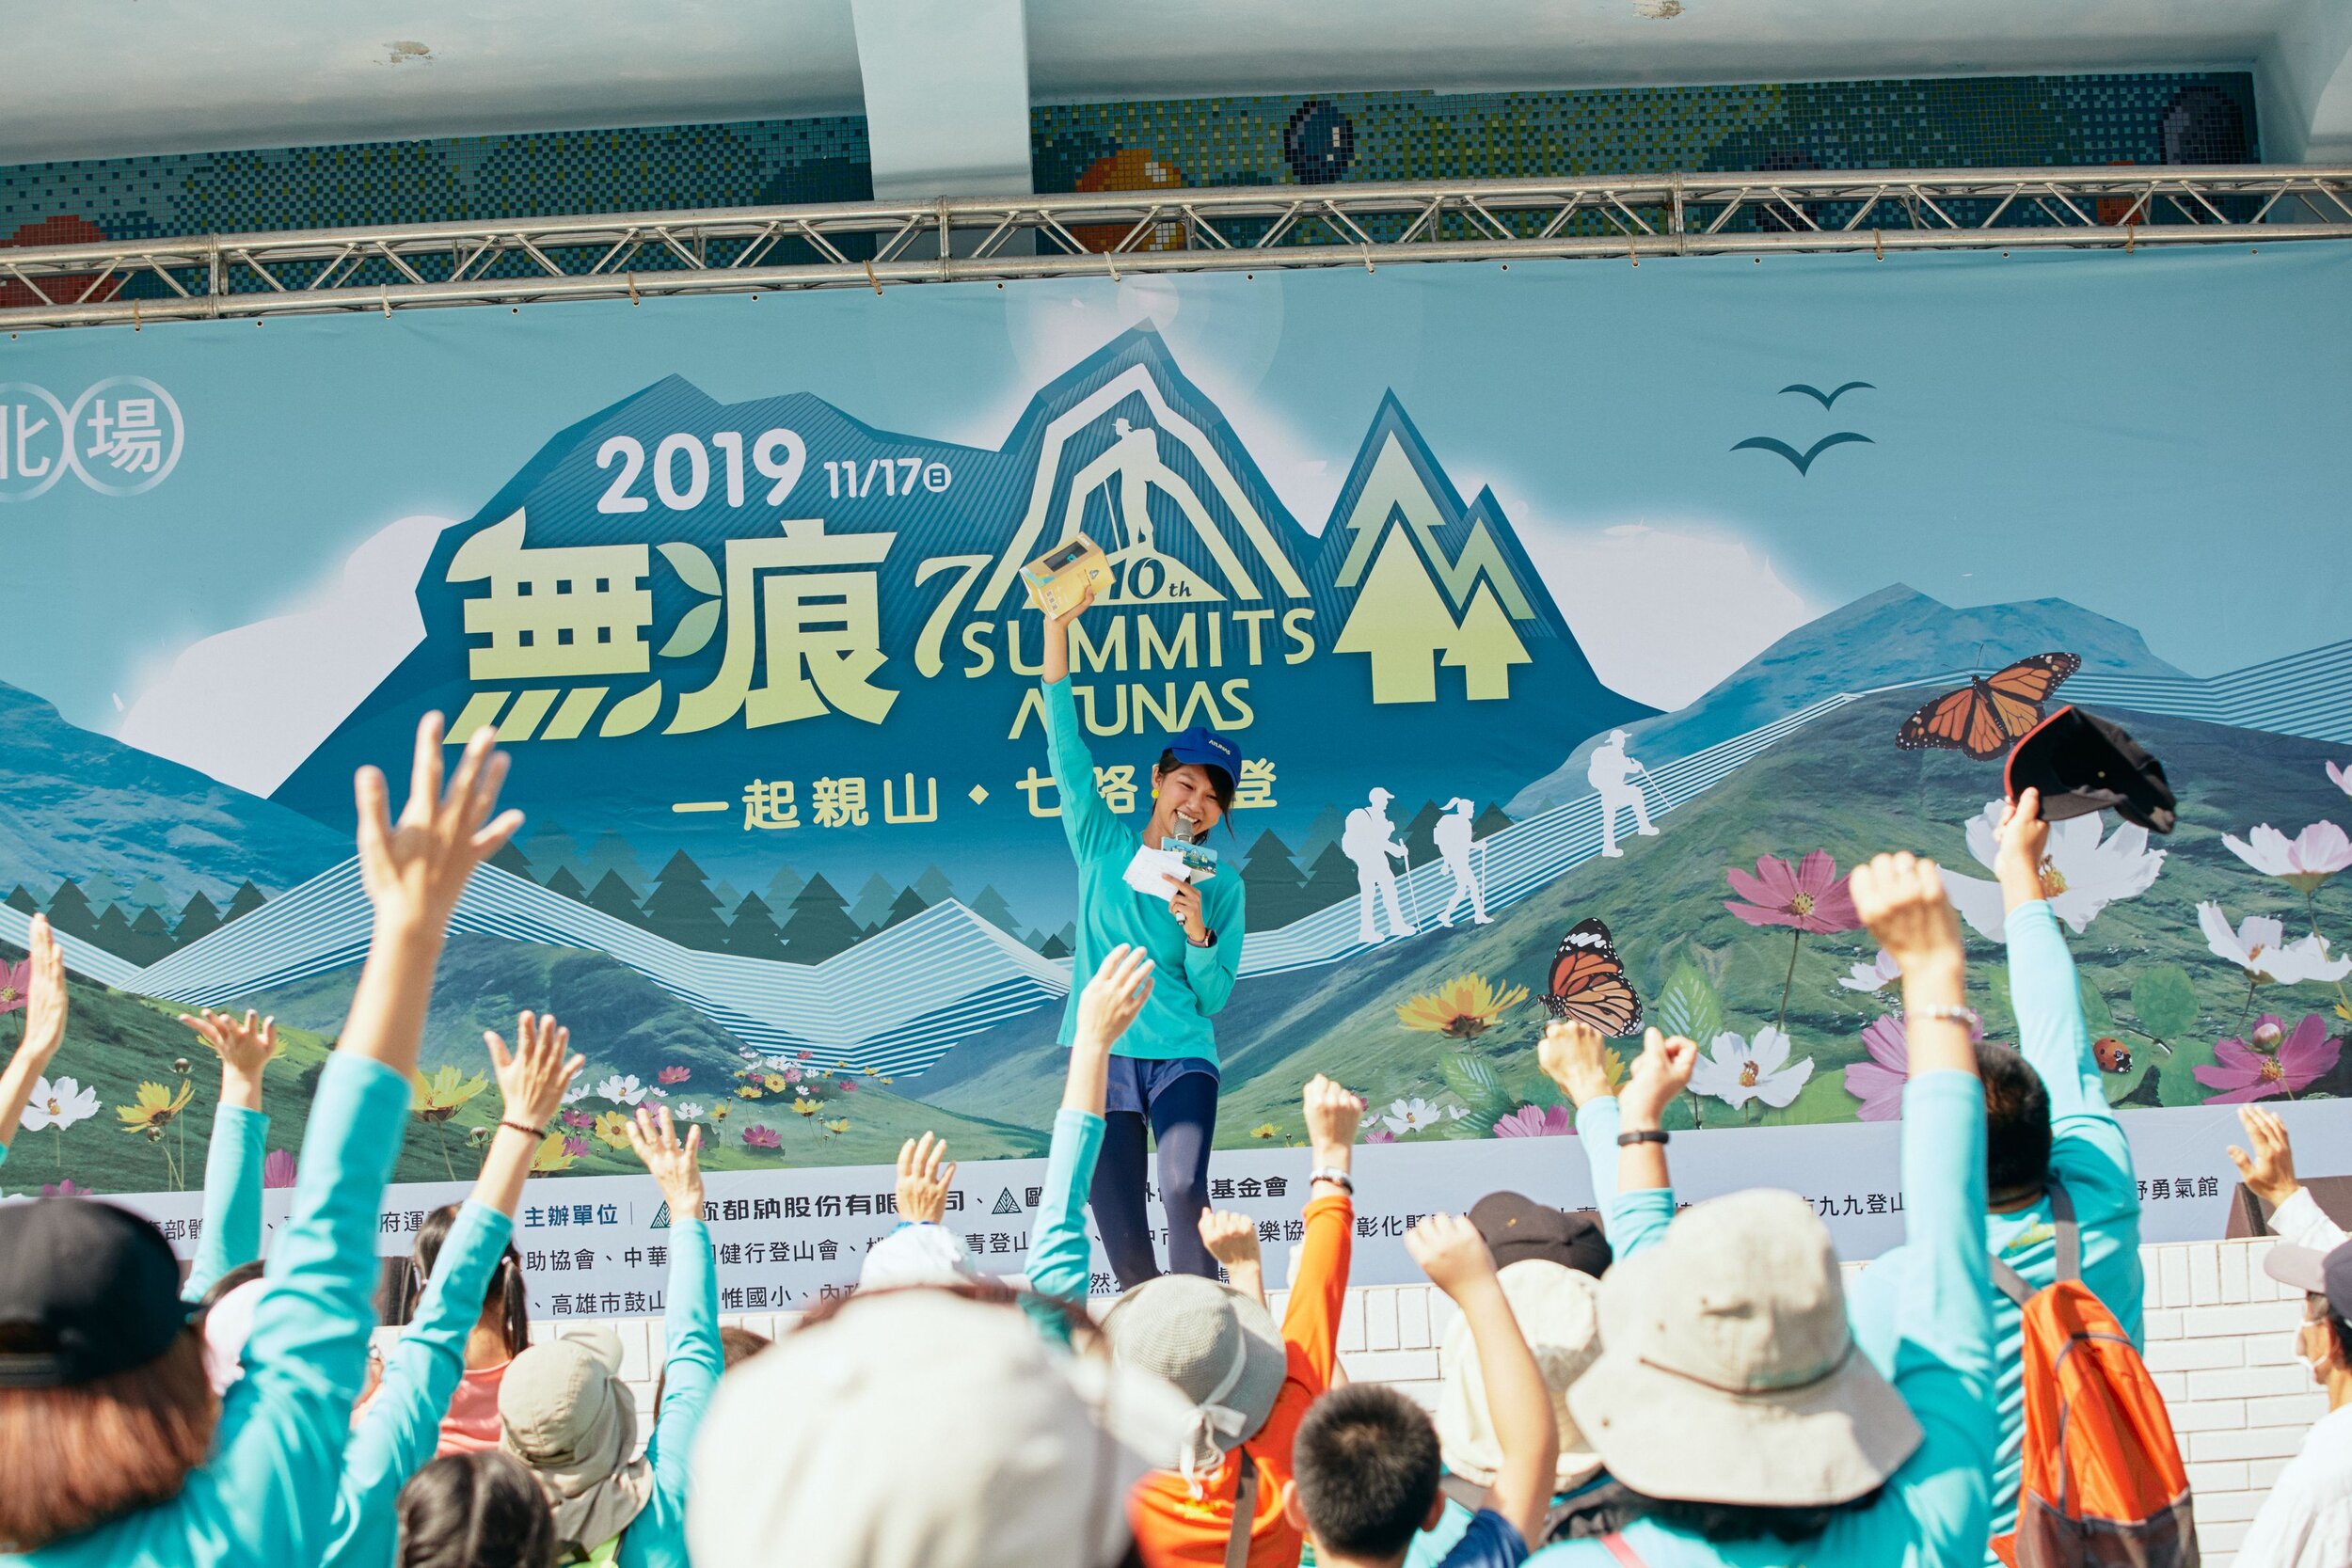 20191117-events-atunas-hiking-taipei-歐都納-無痕山林-永春高中-台北場_45.jpg